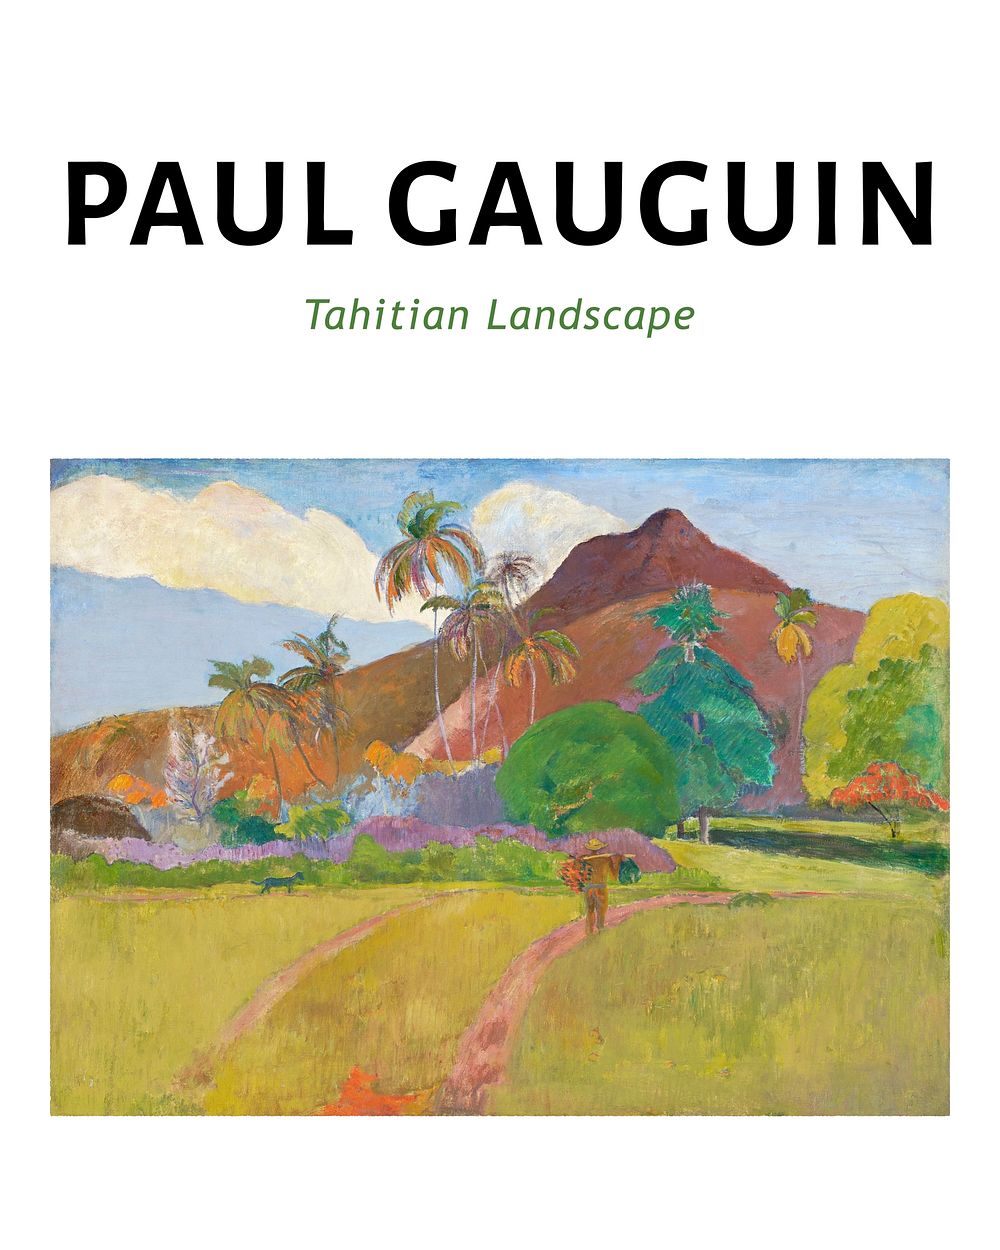 Paul Gauguin poster, famous painting Tahitian Landscape wall art decor